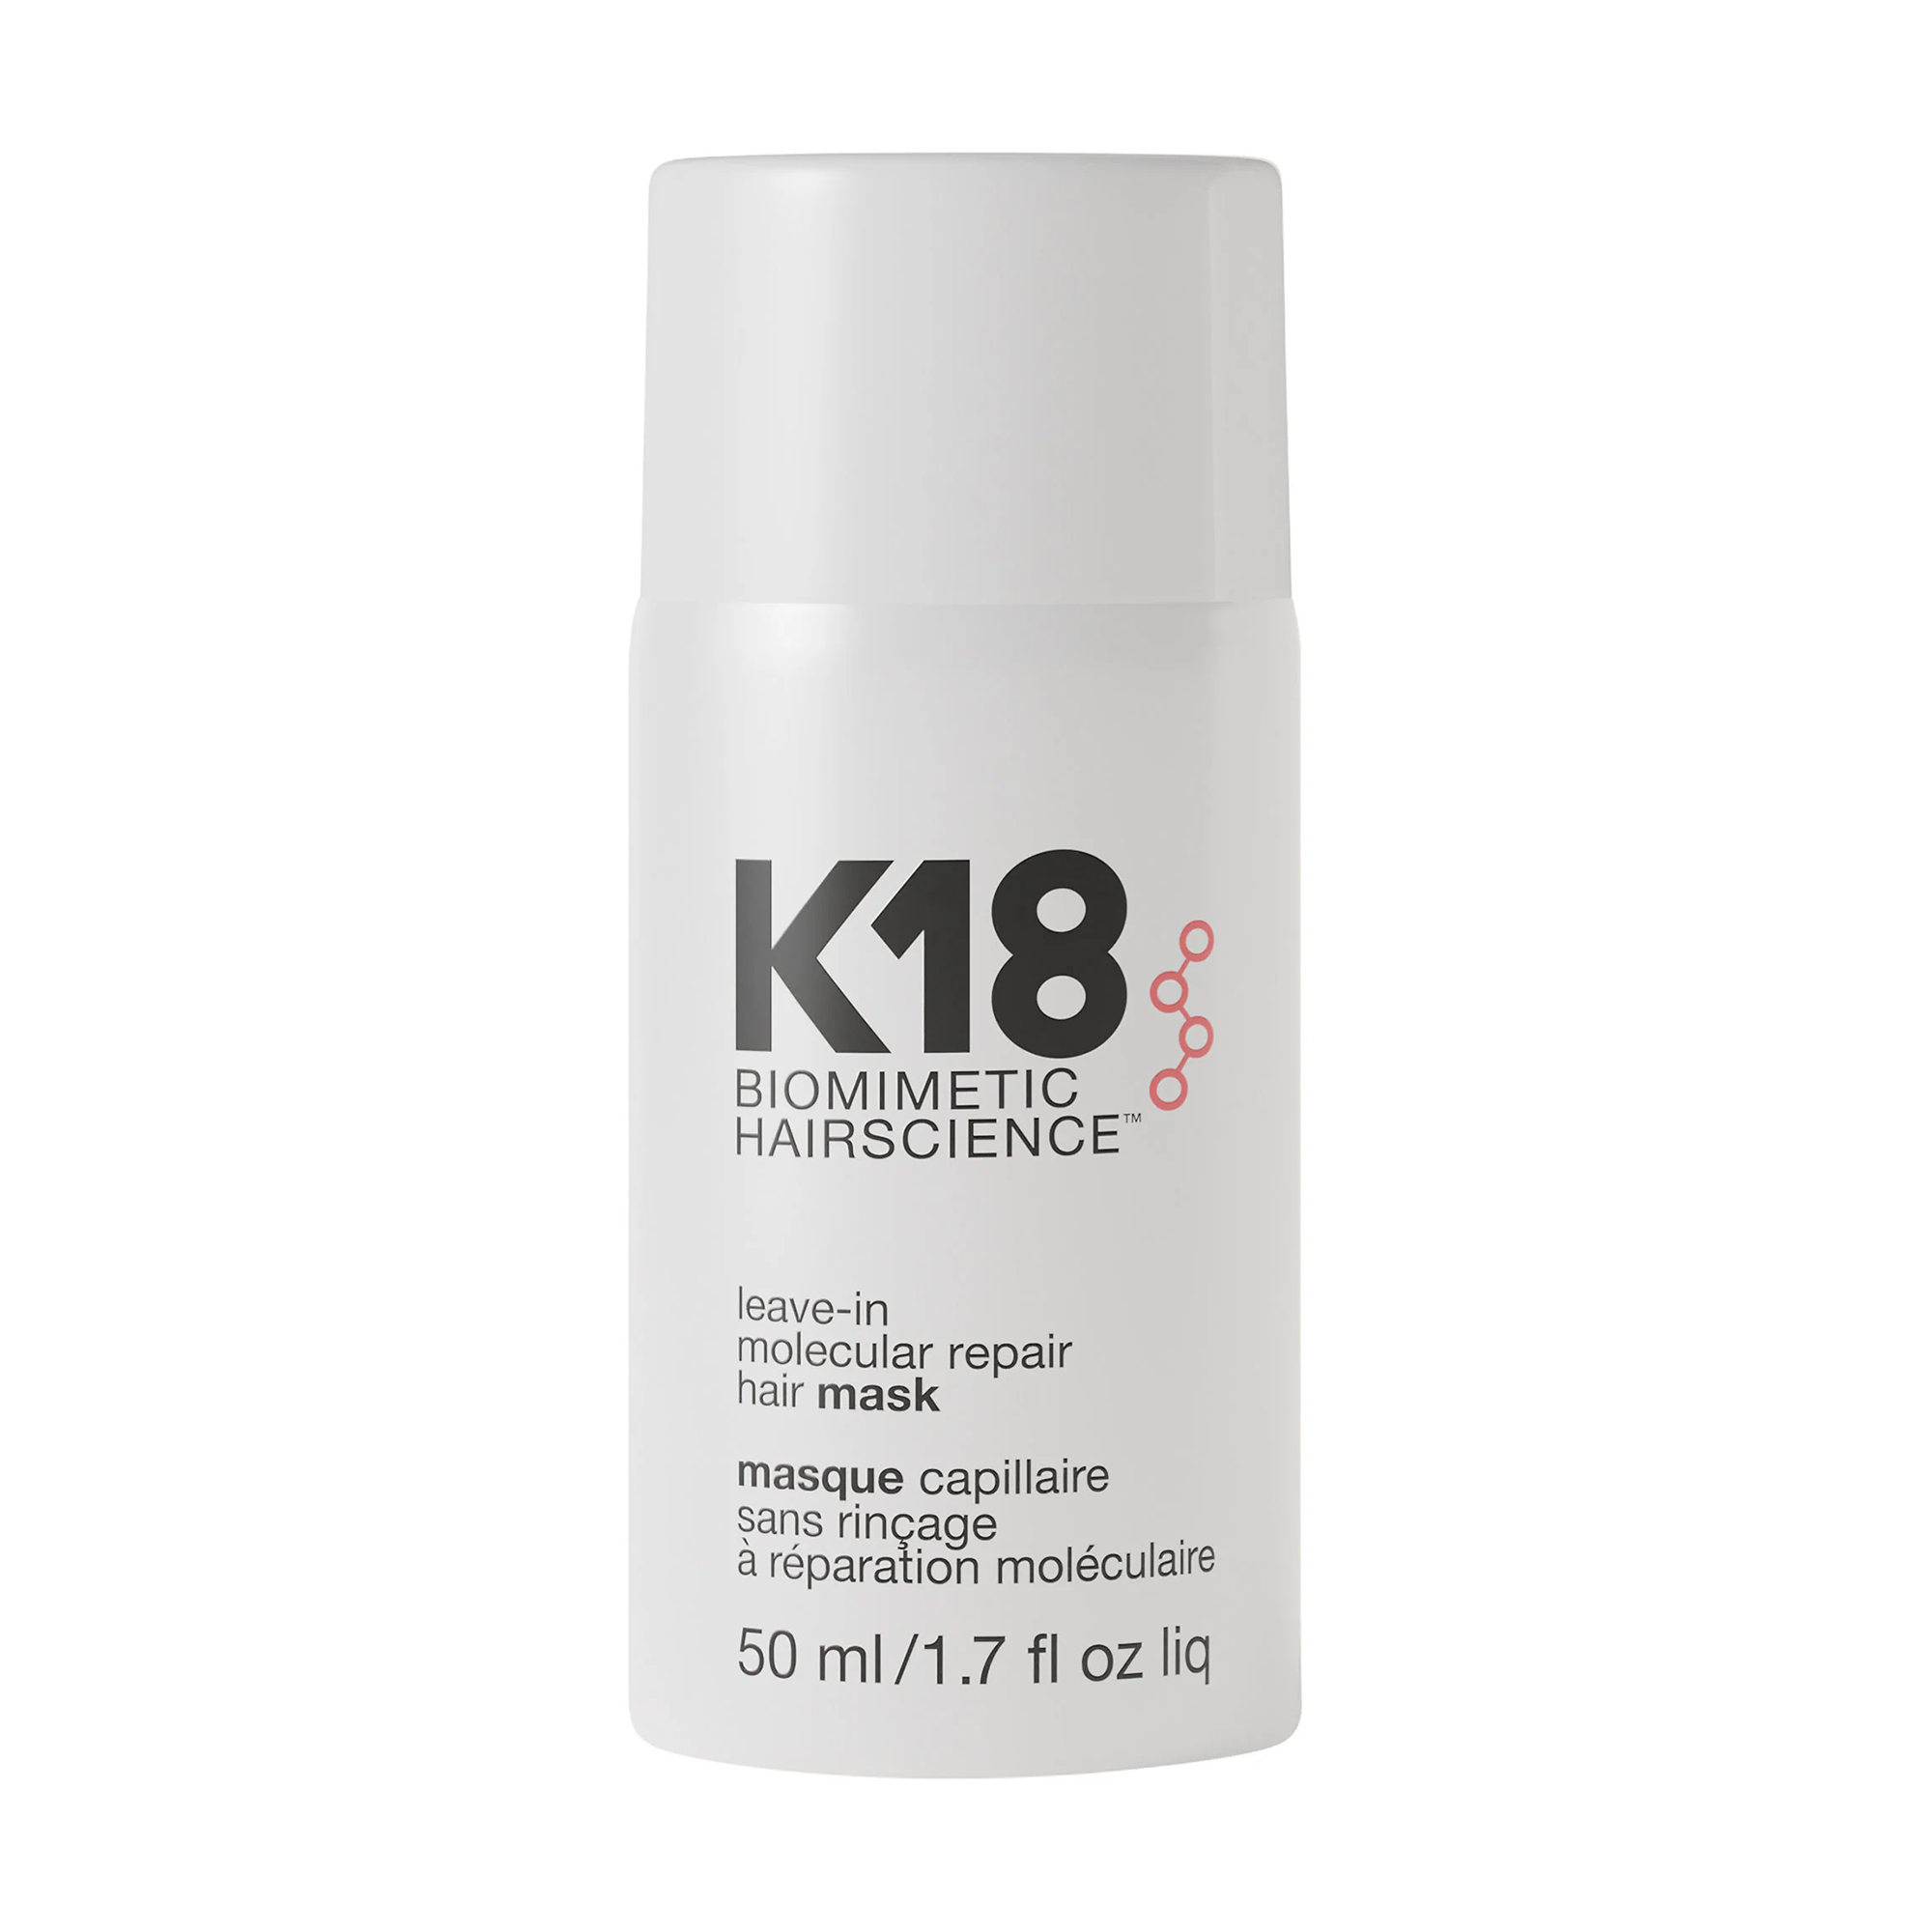 K18 Biomimetic Hairscience Leave-In Molecular Repair Hair Mask / 1.7 oz